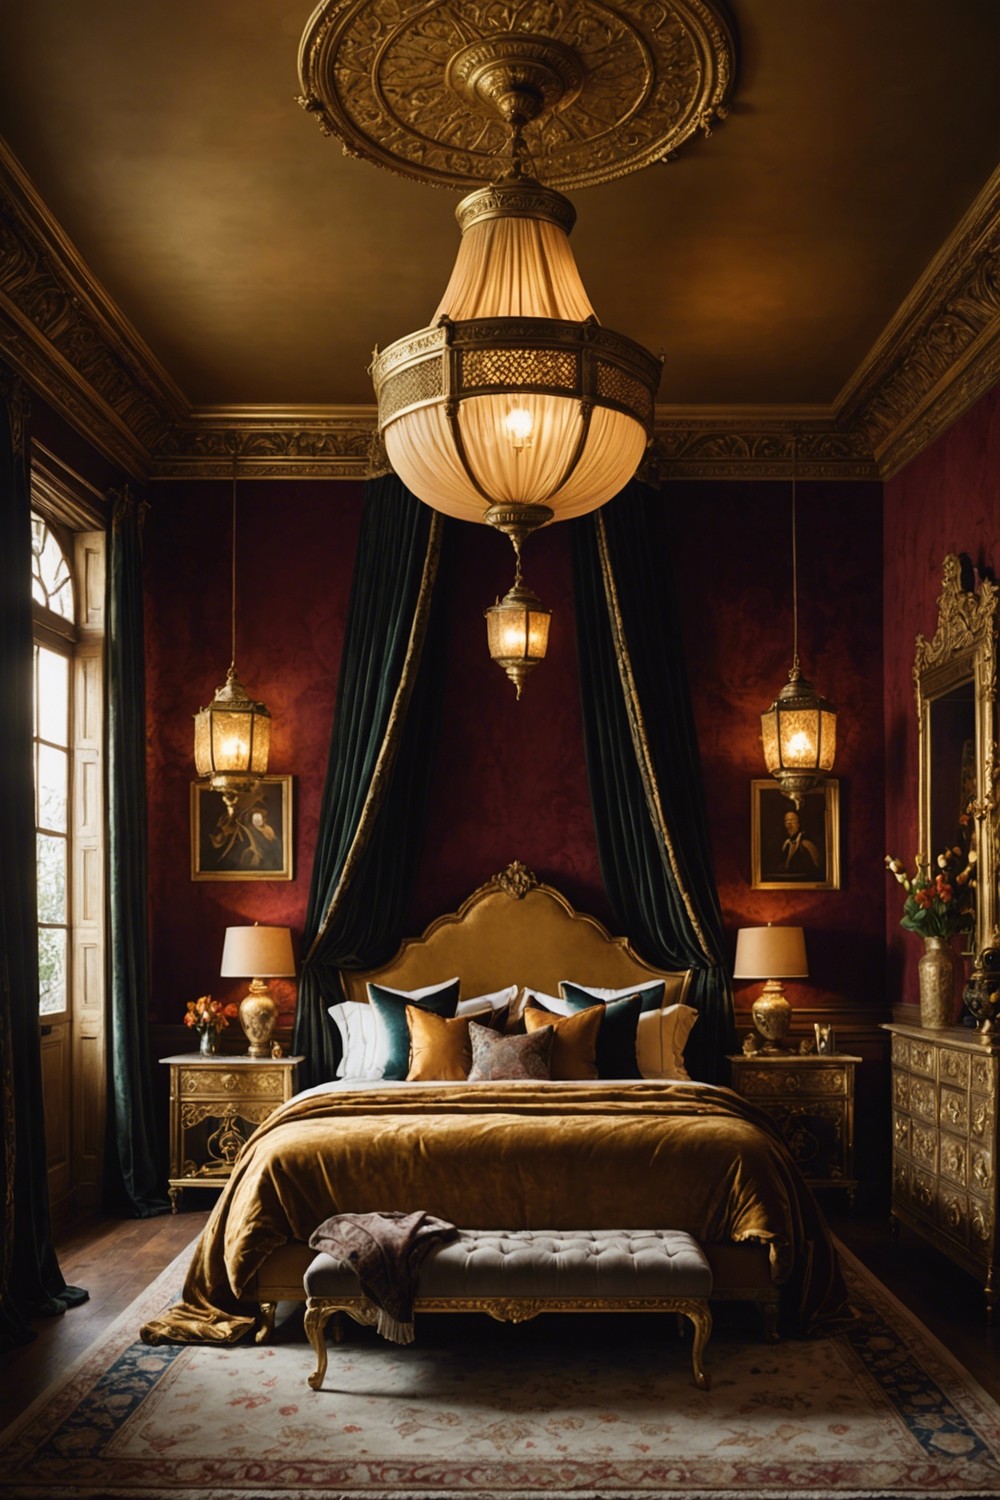 Luxe Nomad: Hanging Antique Brass Lanterns above a Velvet Bed